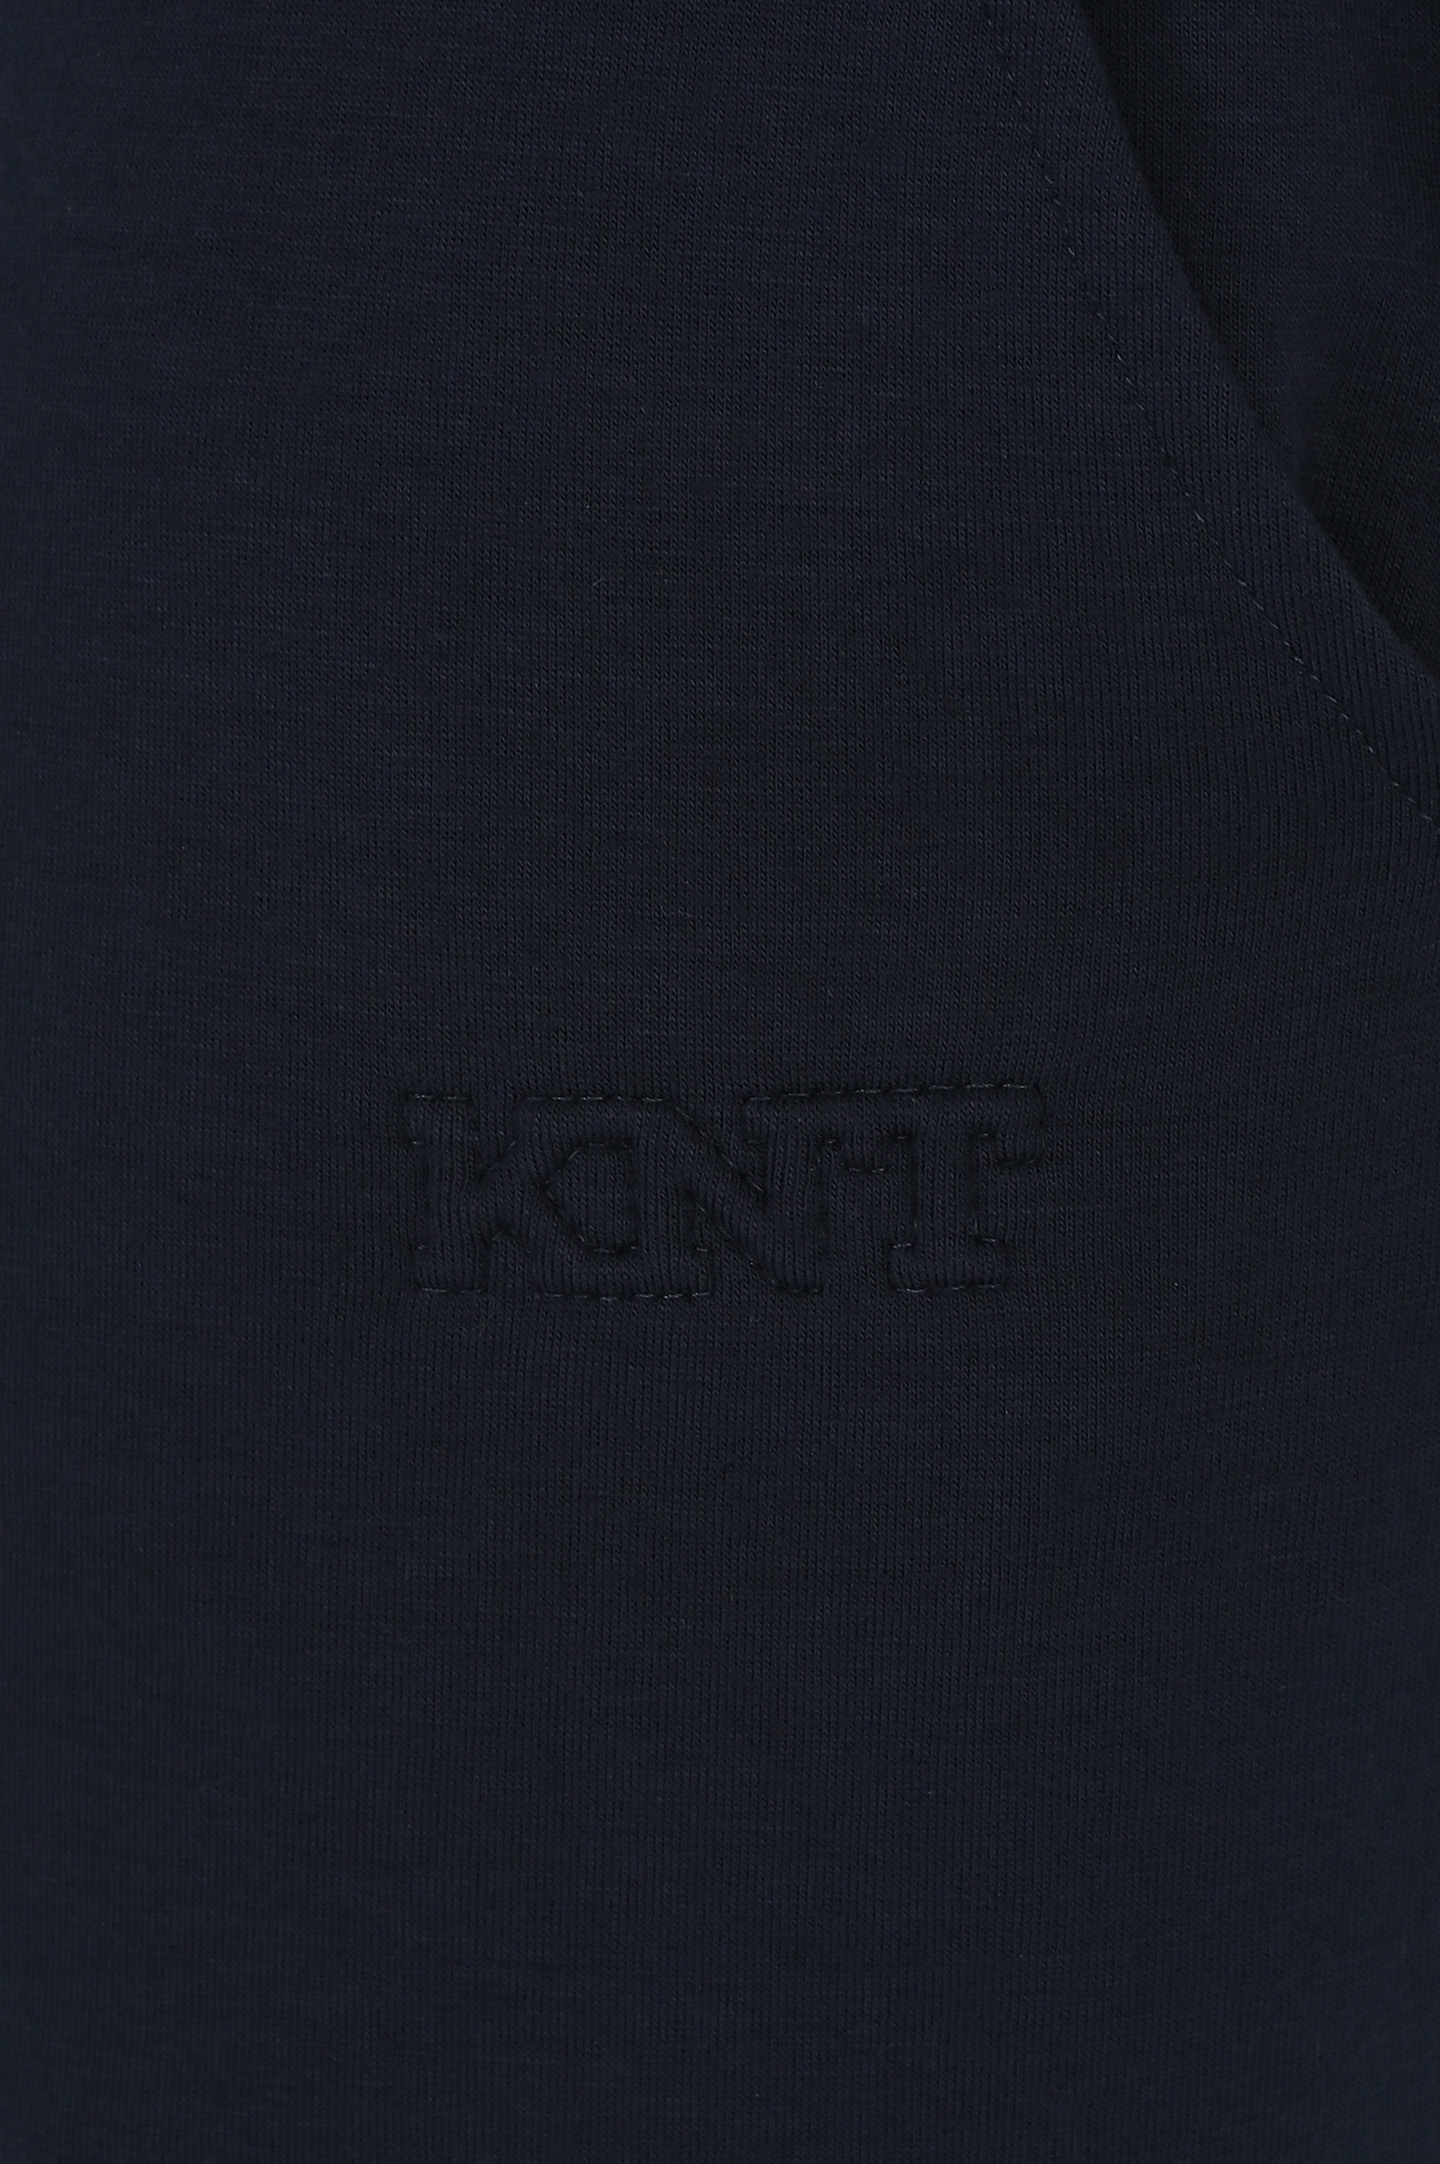 Спортивные брюки из вискозы и эластана KNT BY KITON UMM04840, цвет: Темно-синий, Мужской